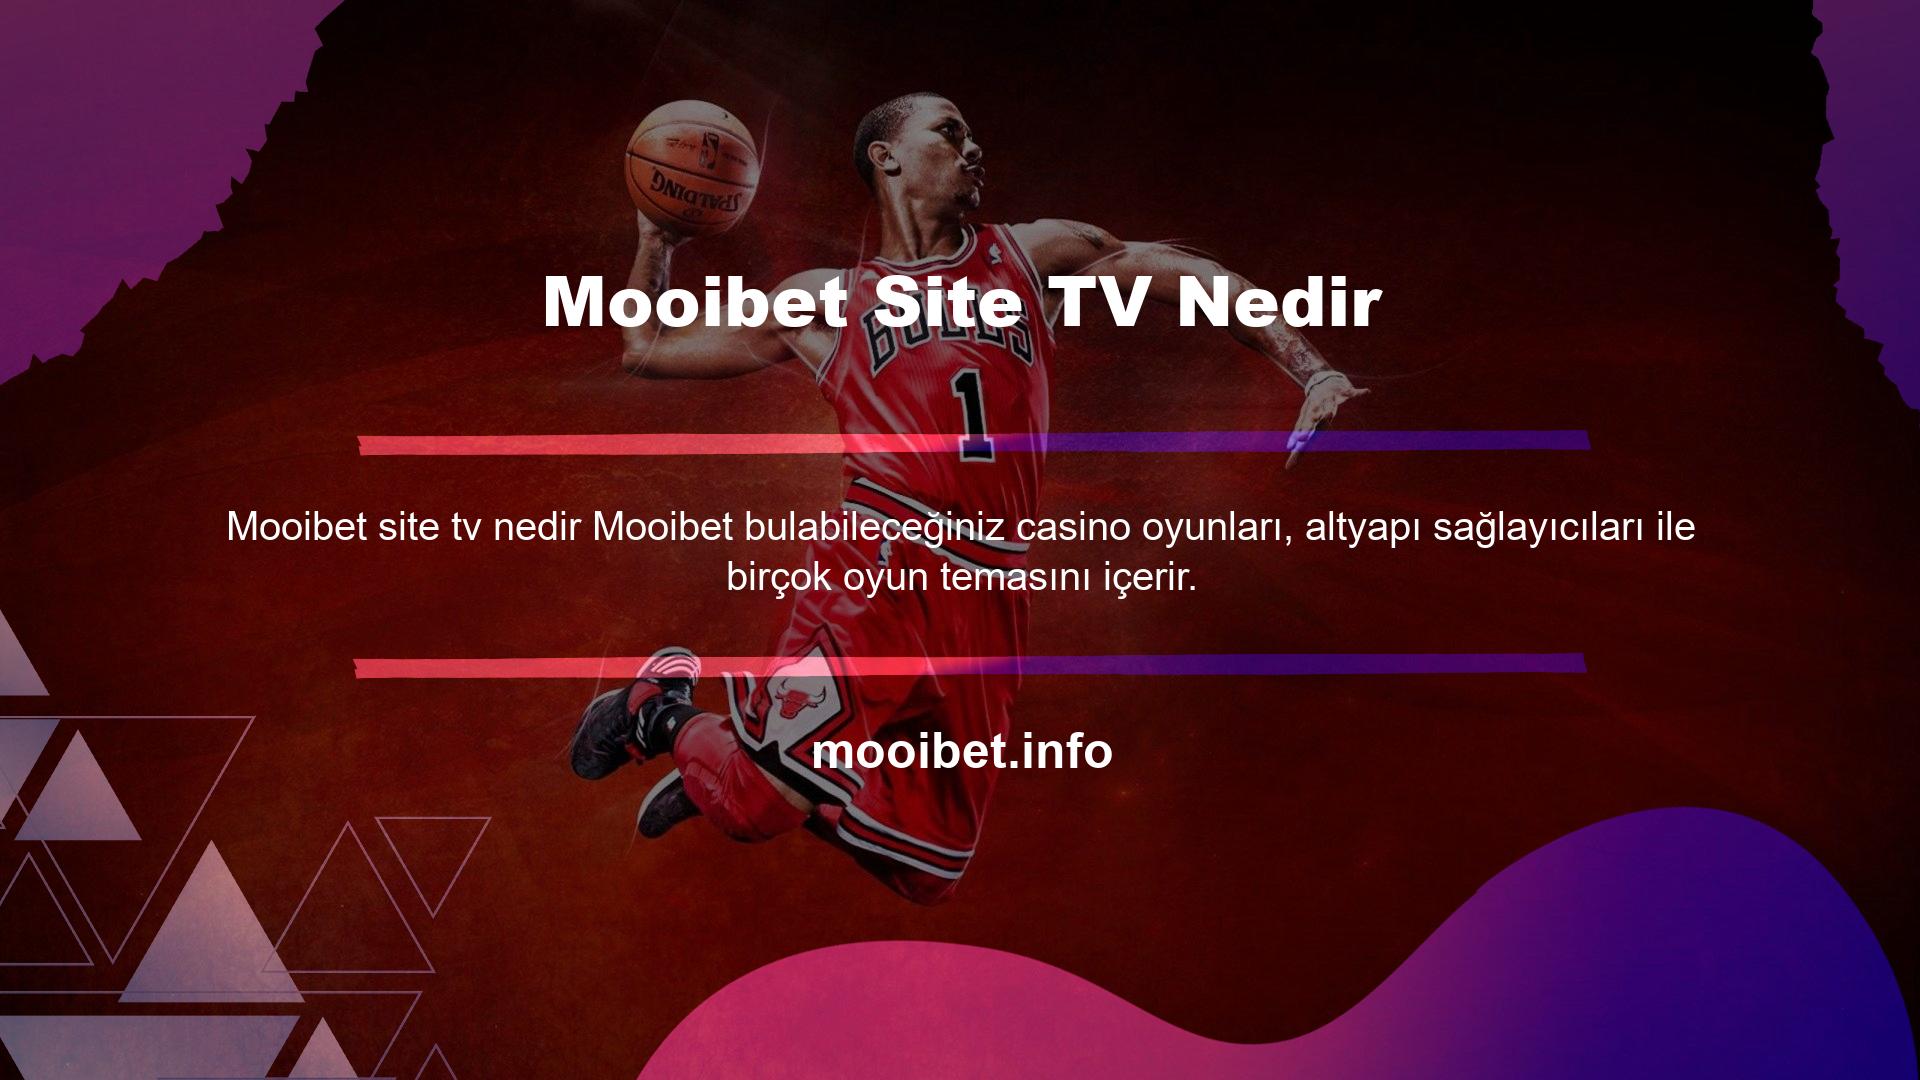 Mooibet Site TV Nedir